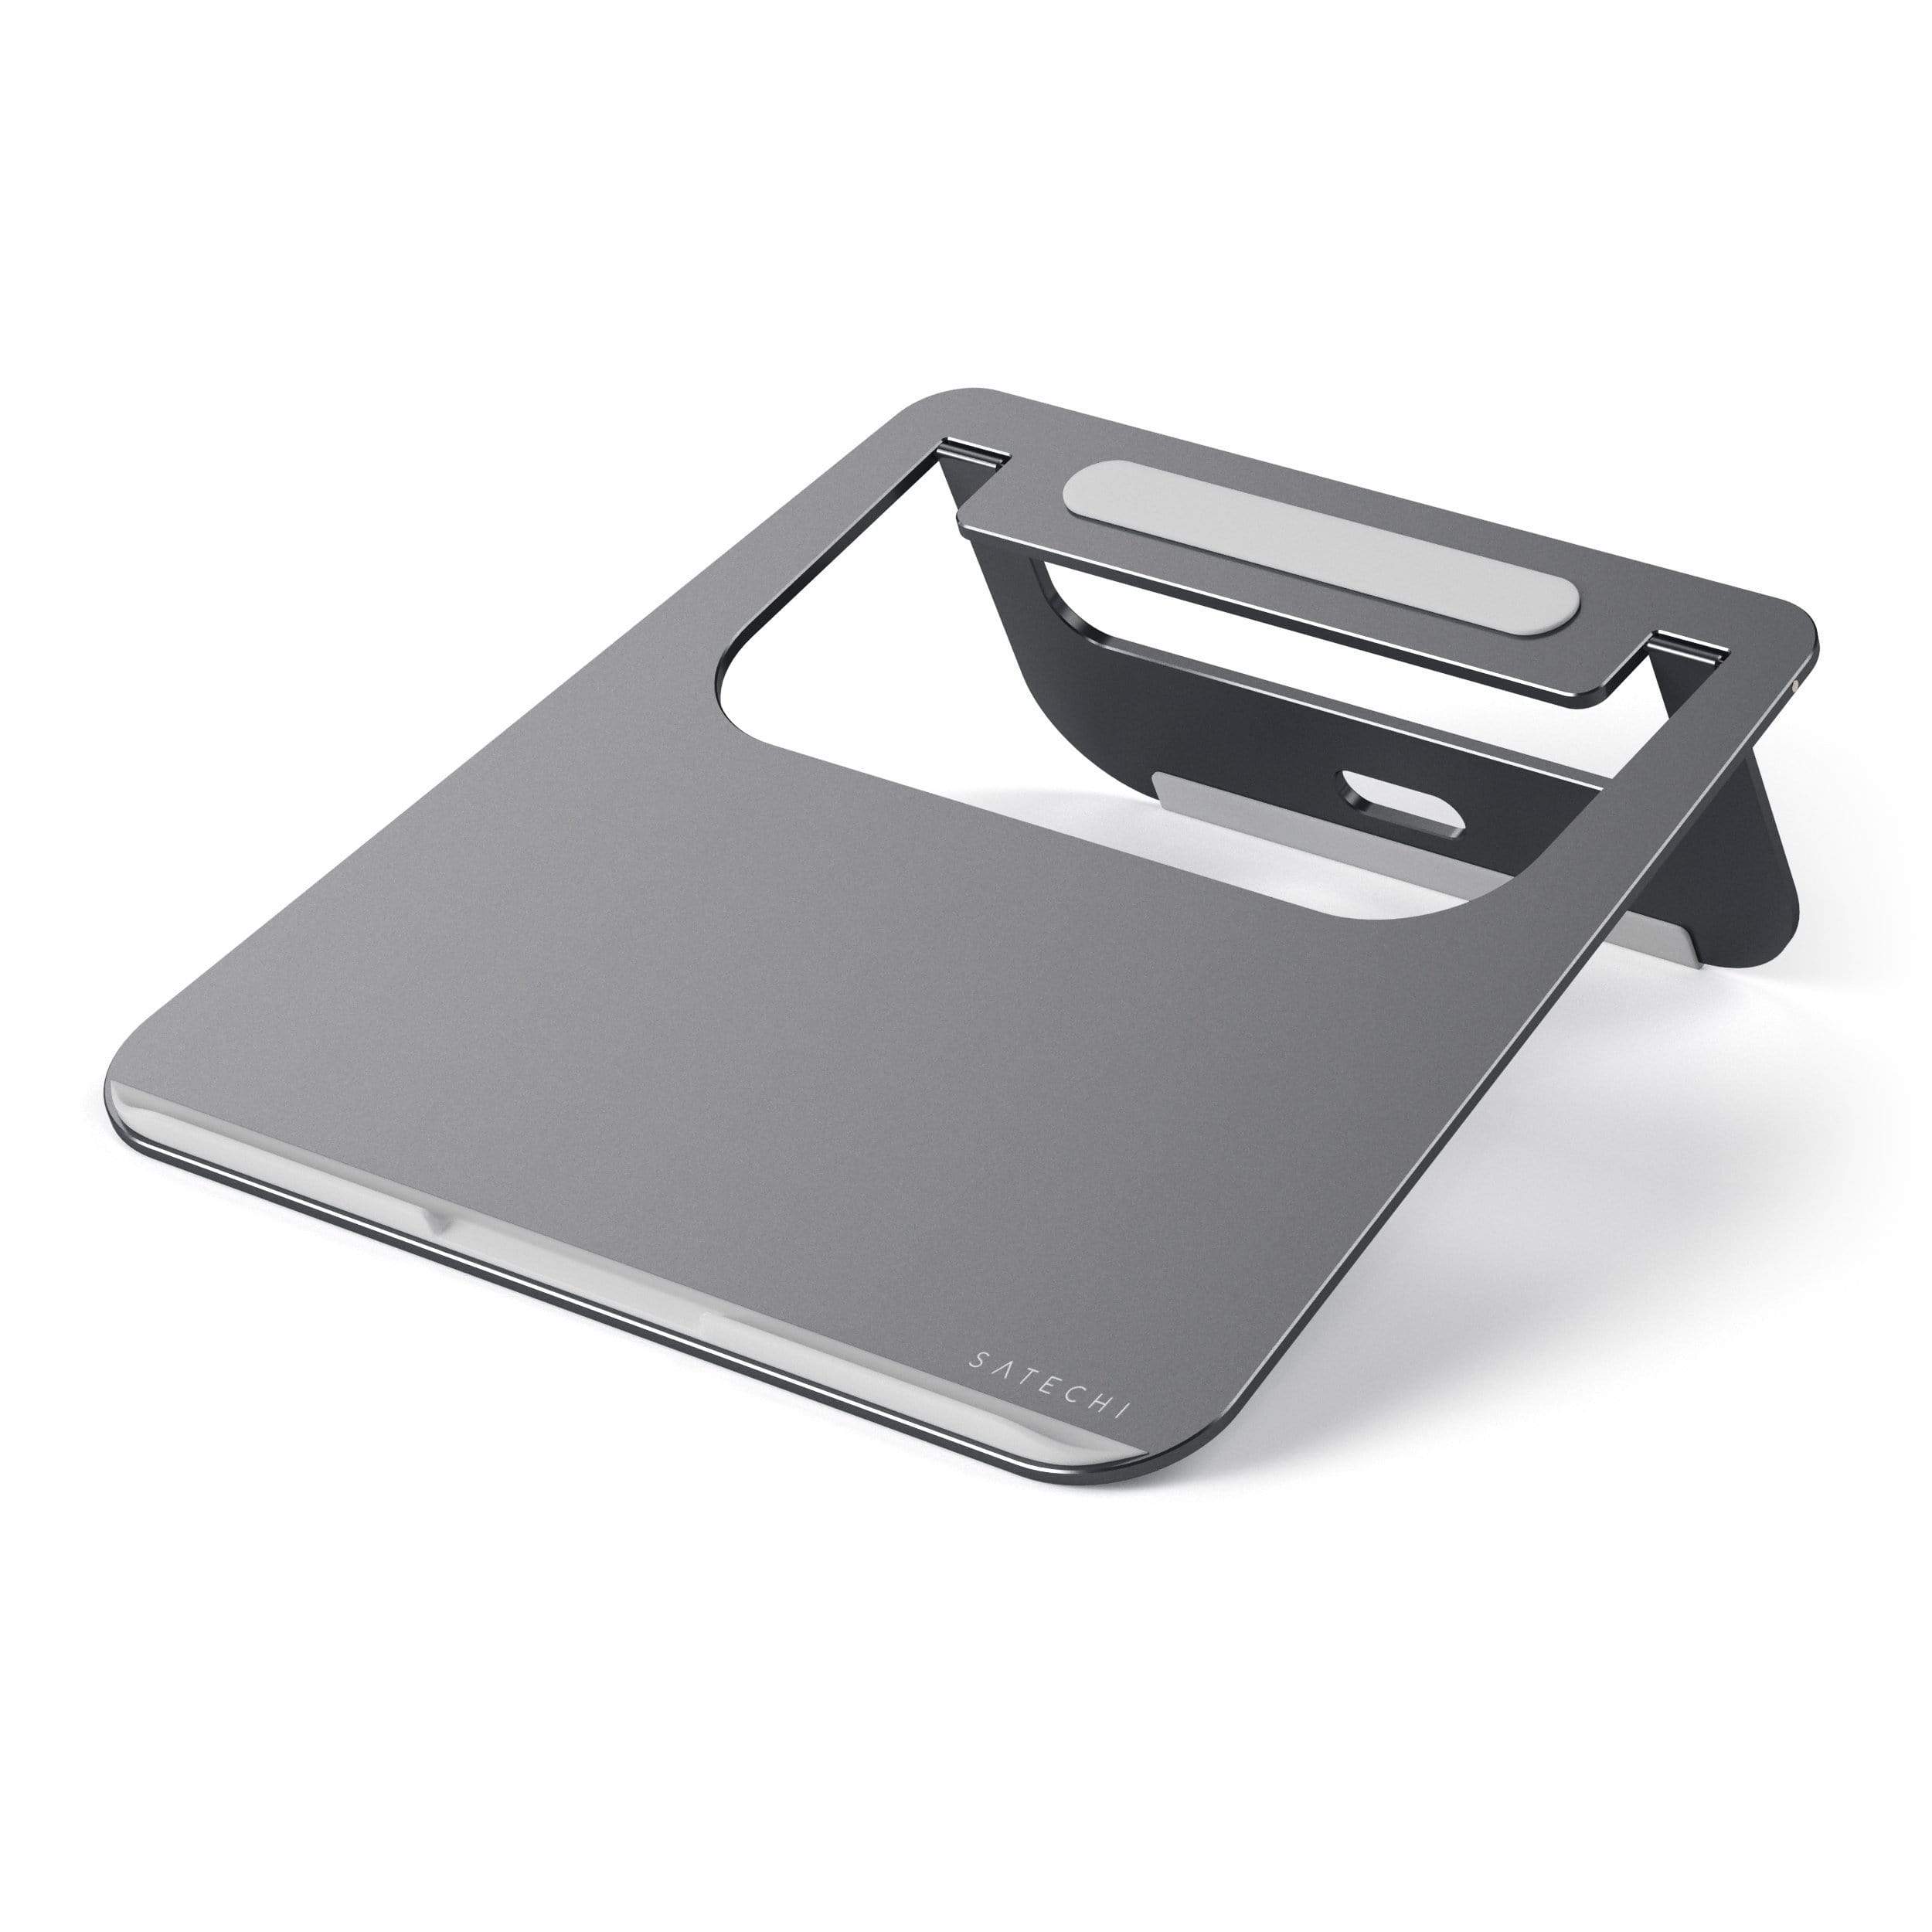 SWISSTEN aluminium laptop stand